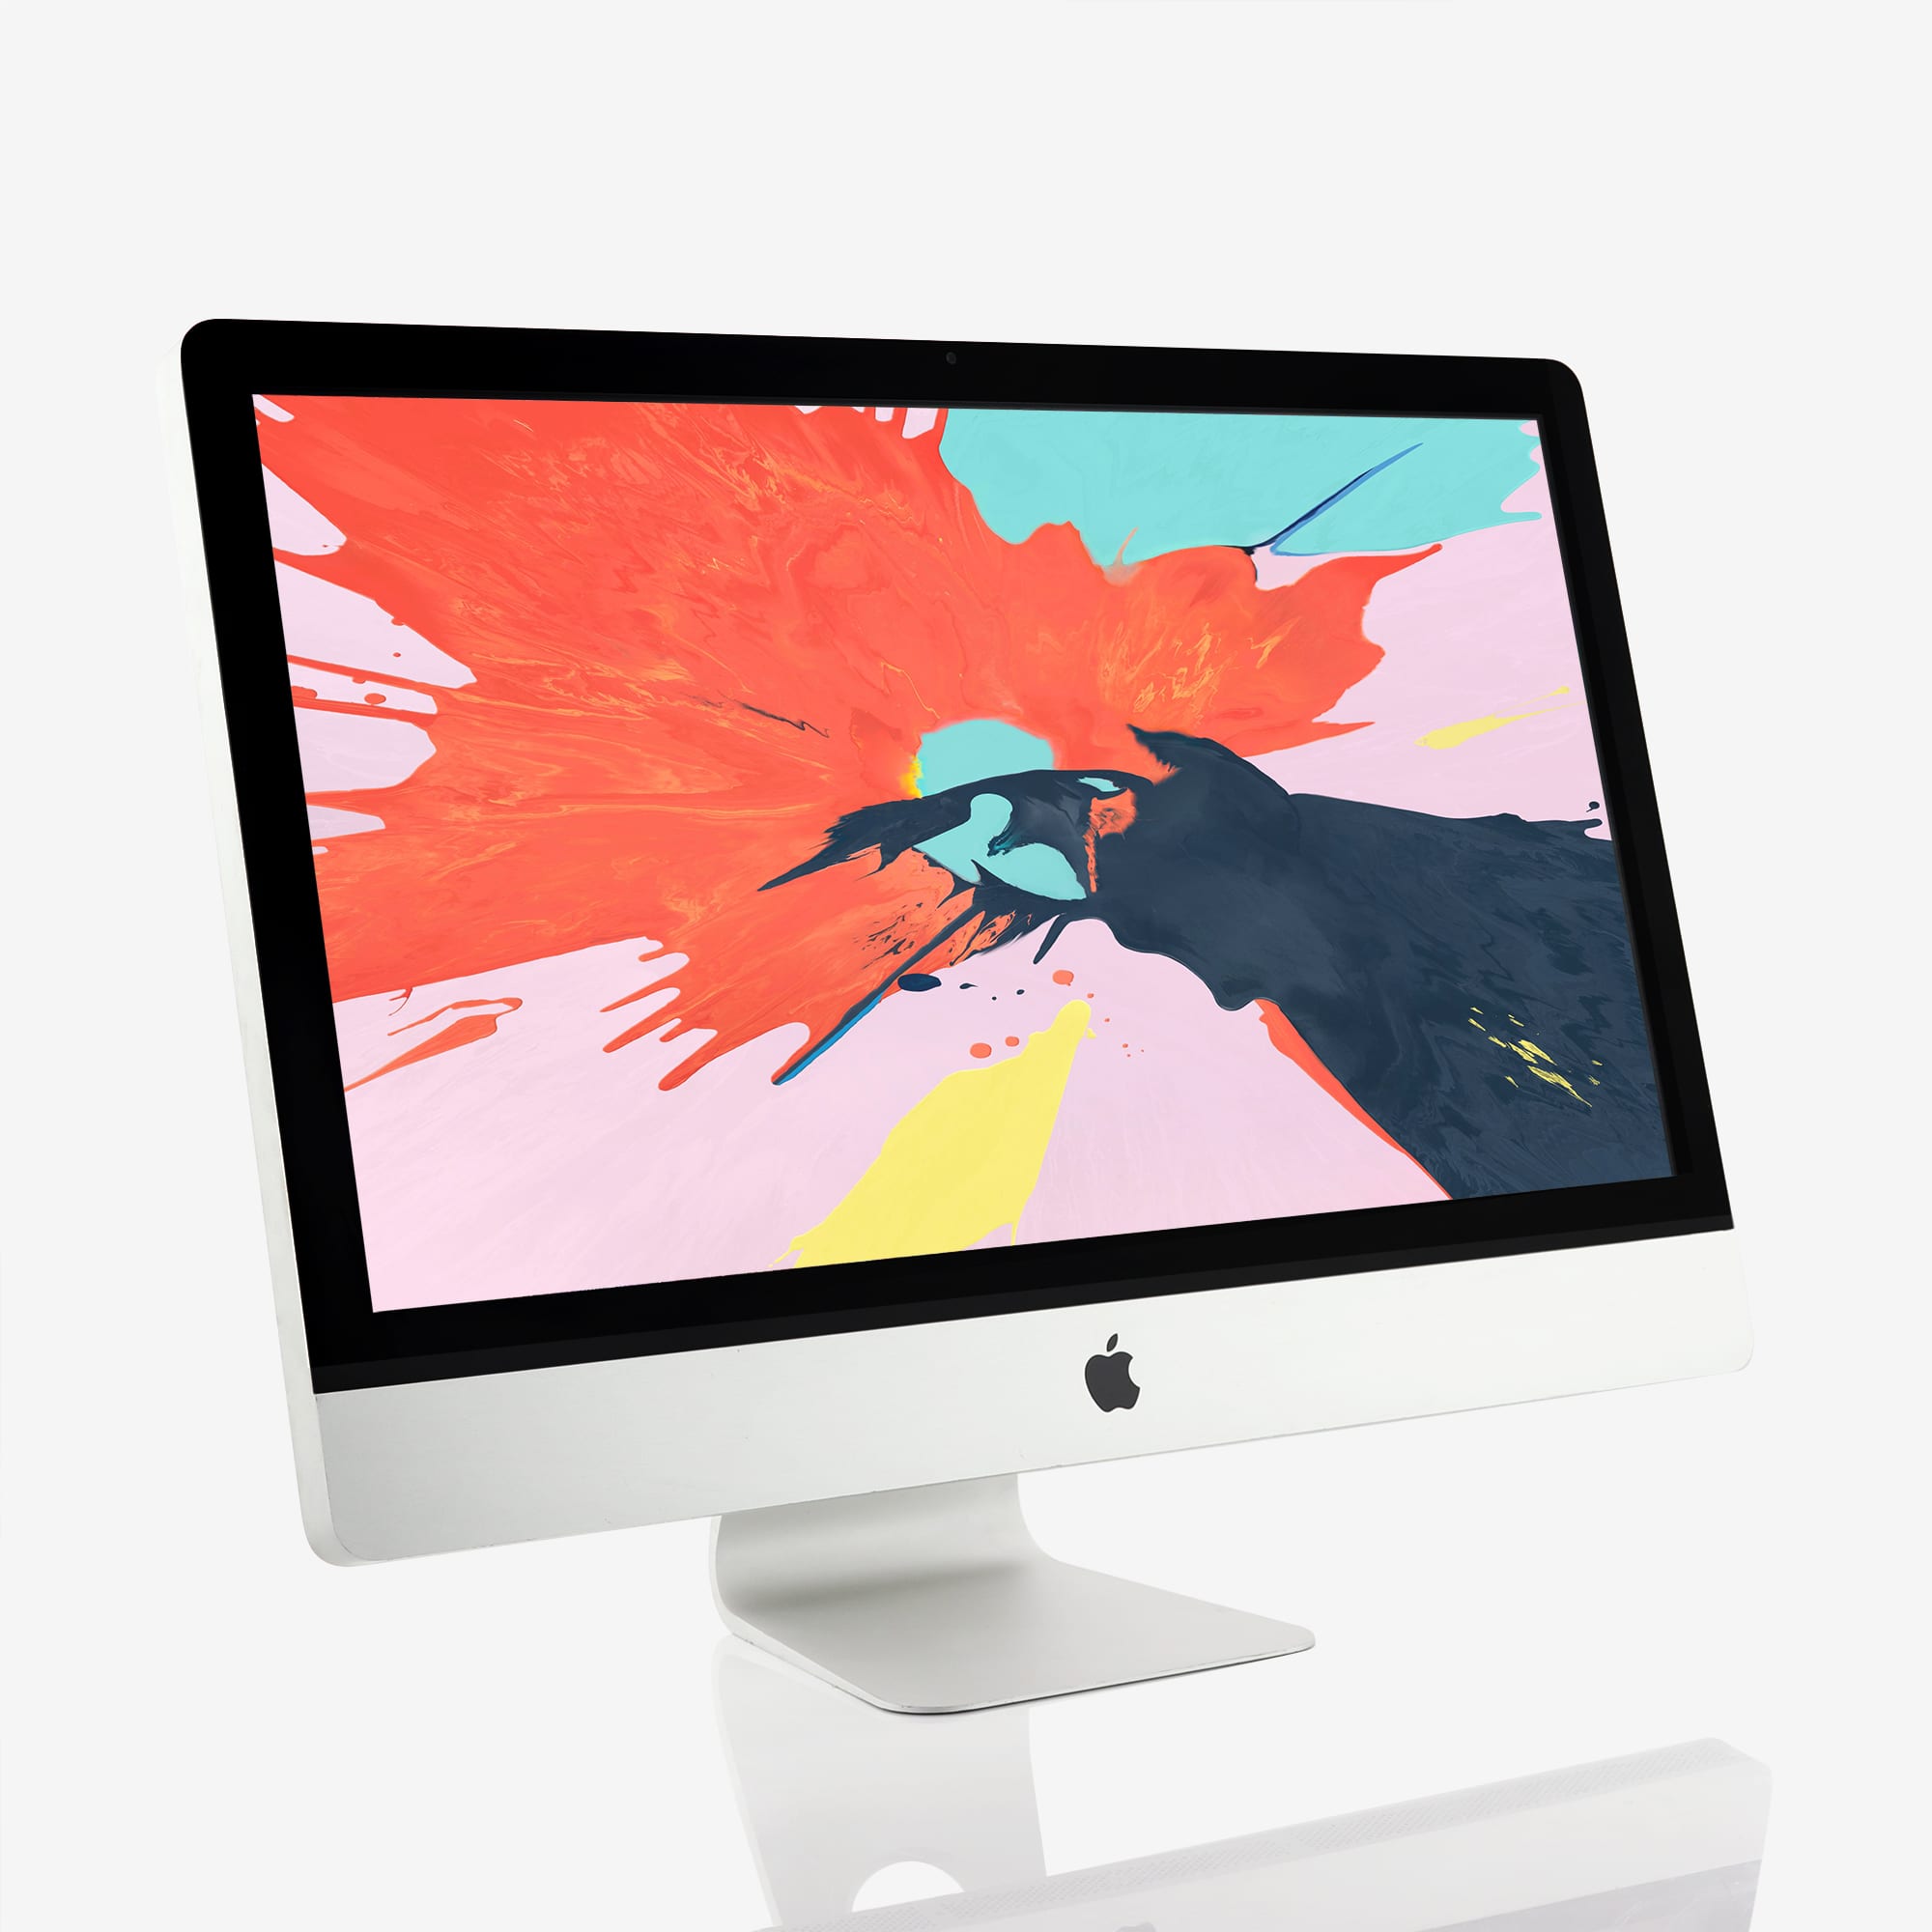 1 x Apple iMac 27 Inch Quad Core i7 2.80 GHz (2009)